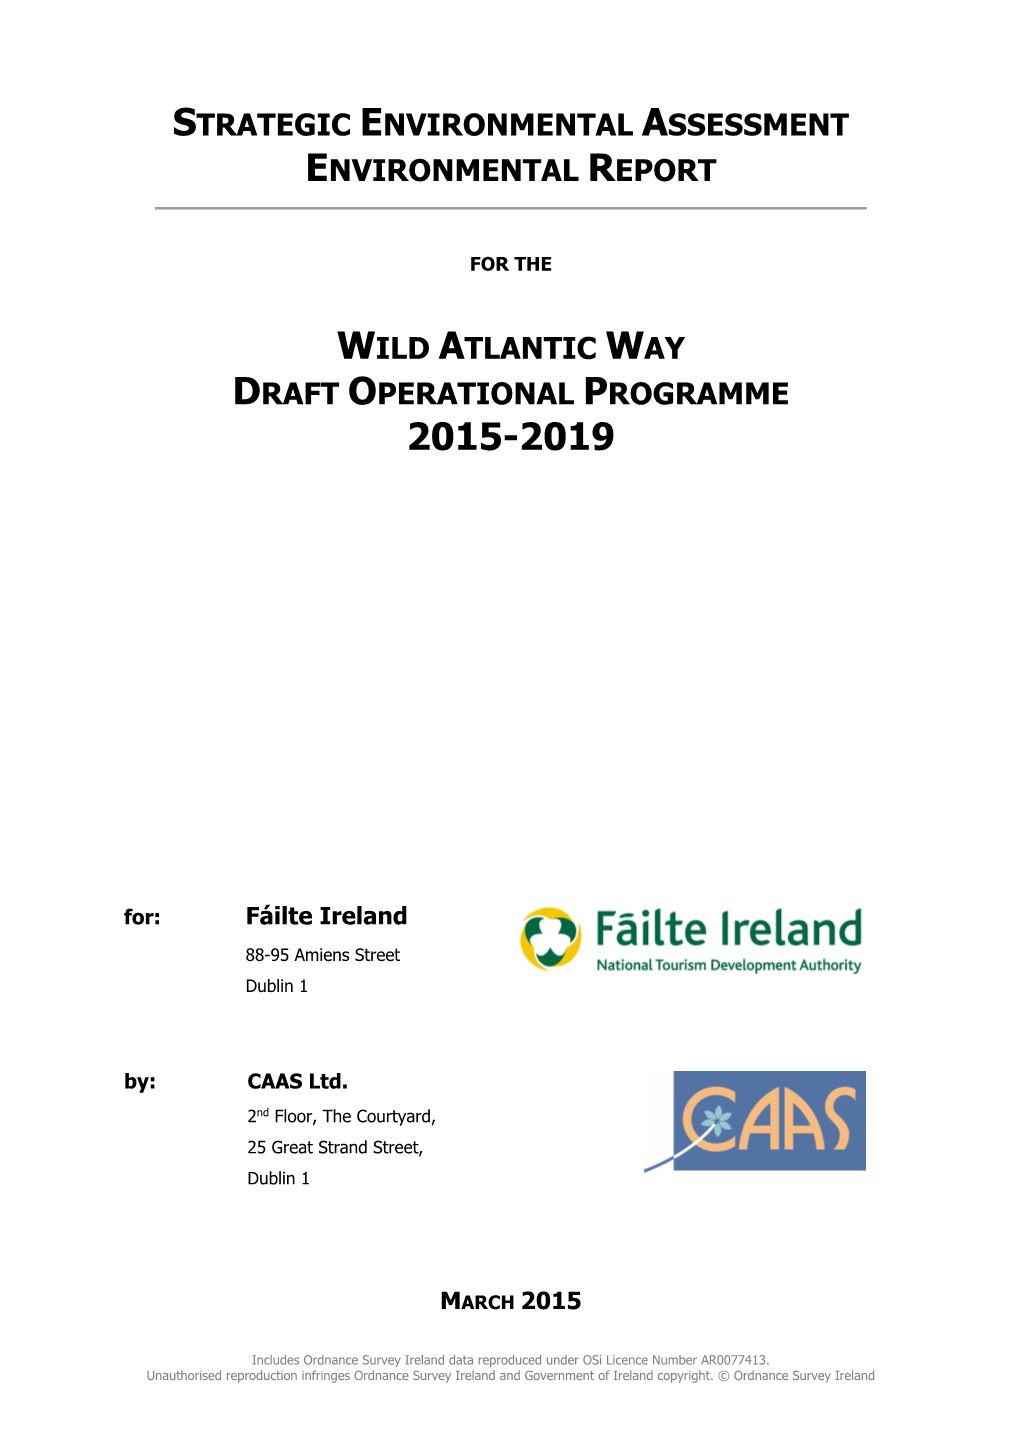 Strategic Environmental Assessment Environmental Report Wild Atlantic Way Draft Operational Programme